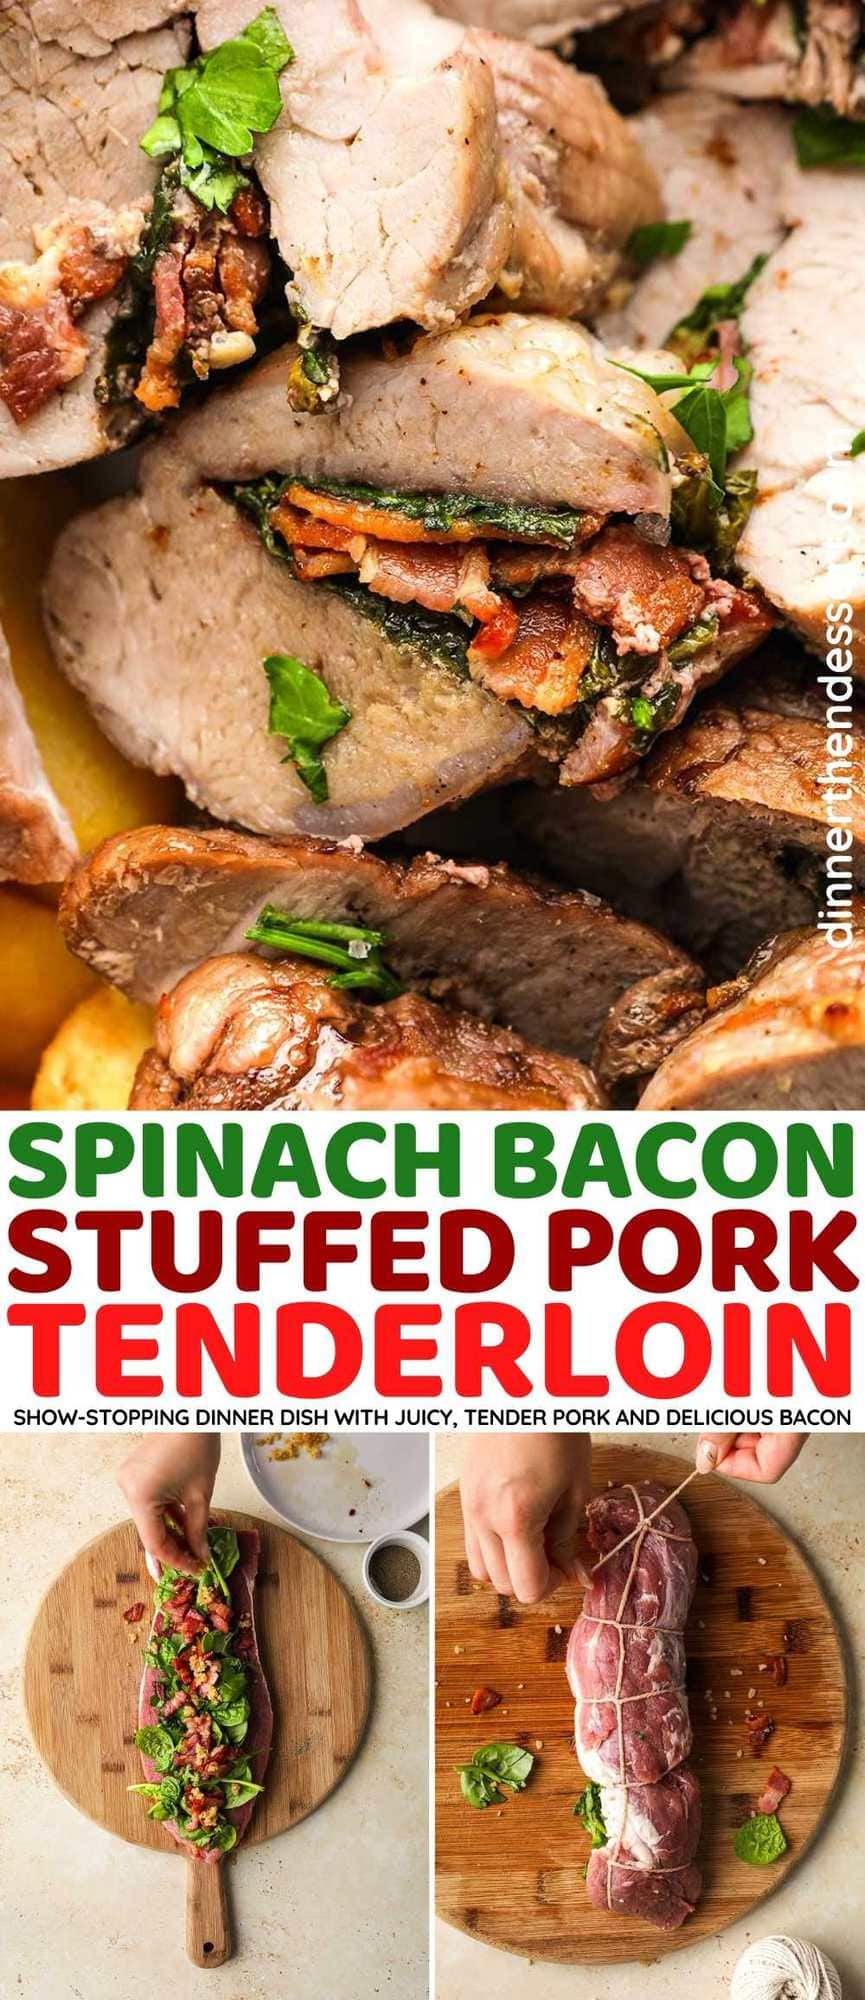 Spinach Bacon Stuffed Pork Tenderloin collage